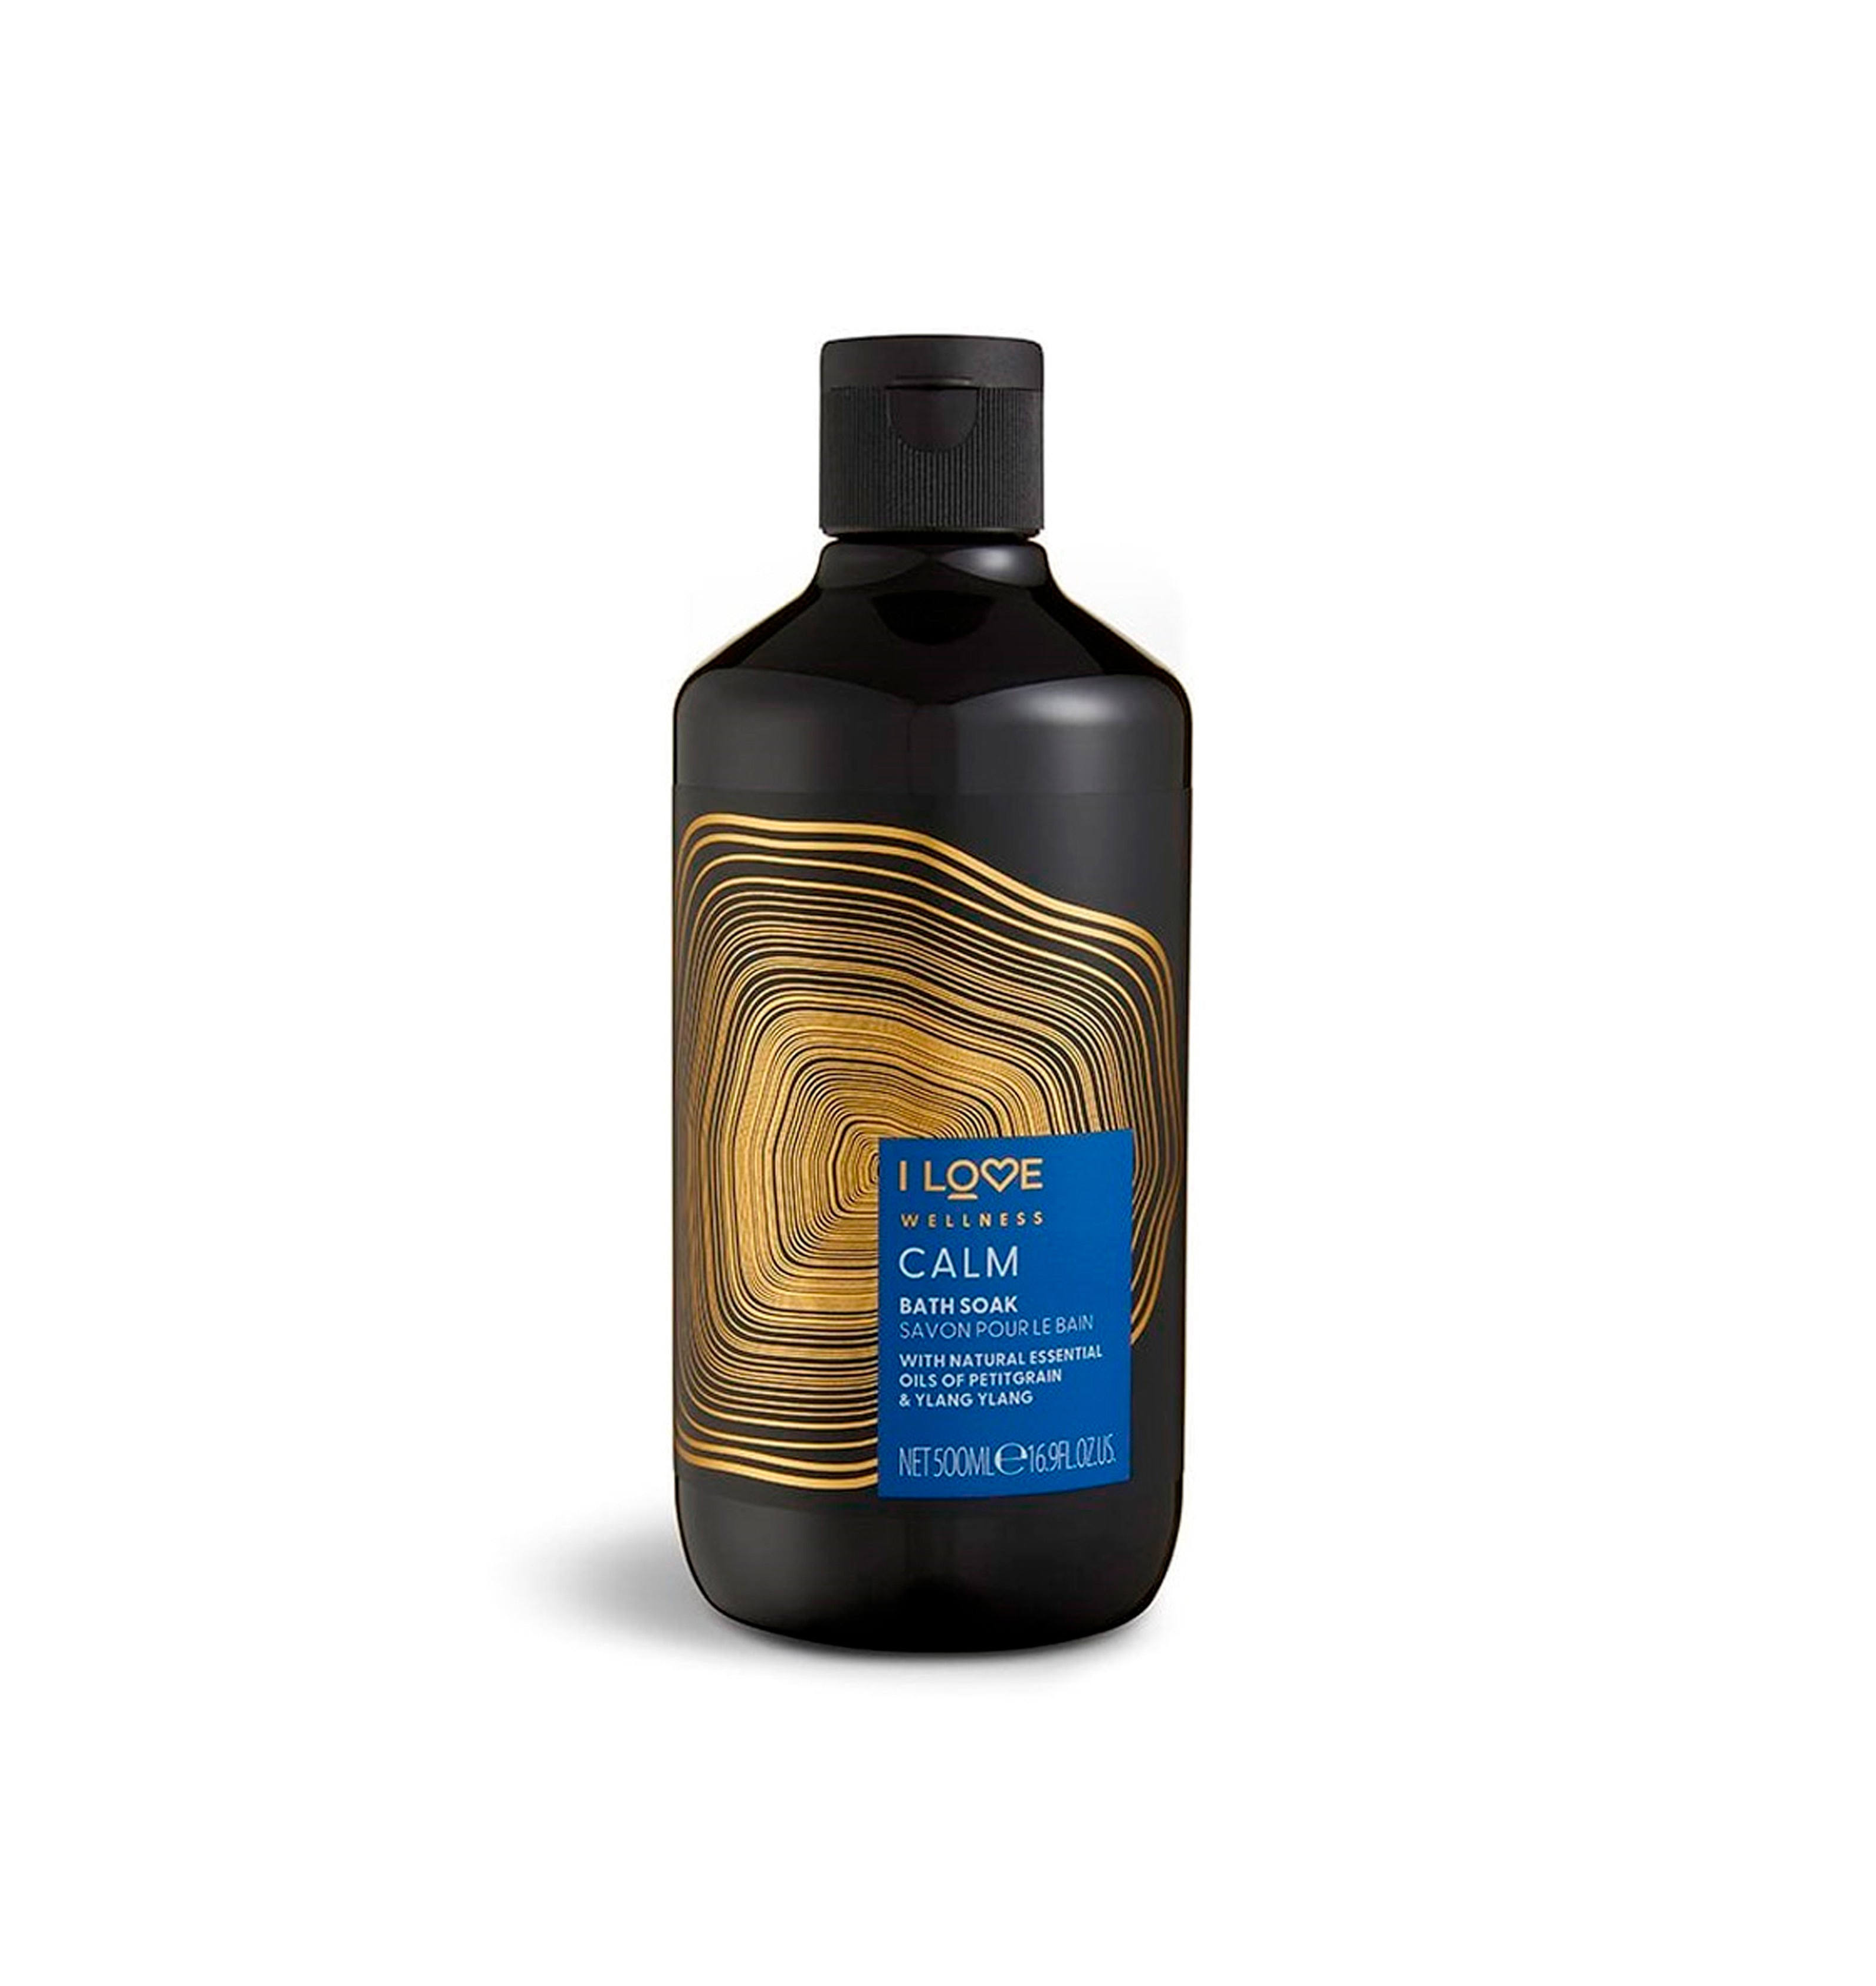 Bath Essential Oil Blend - I Love Wellness Calm Bath Soak 500 ml